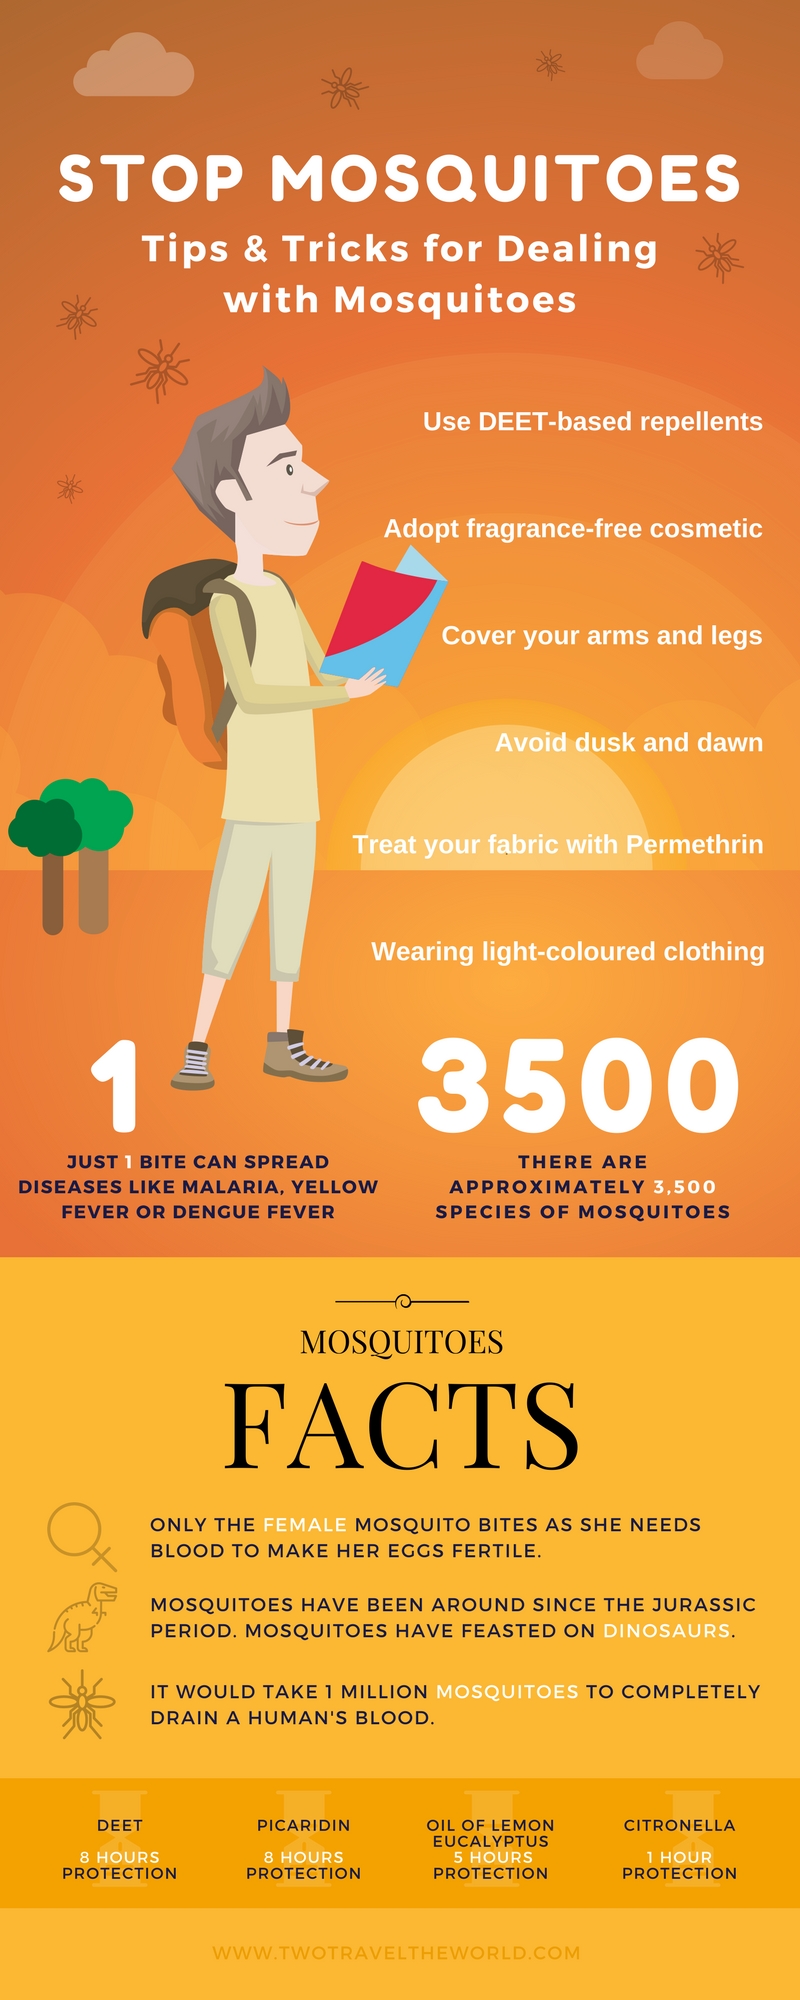 Best Killer Tricks To Keep Mosquitoes Away